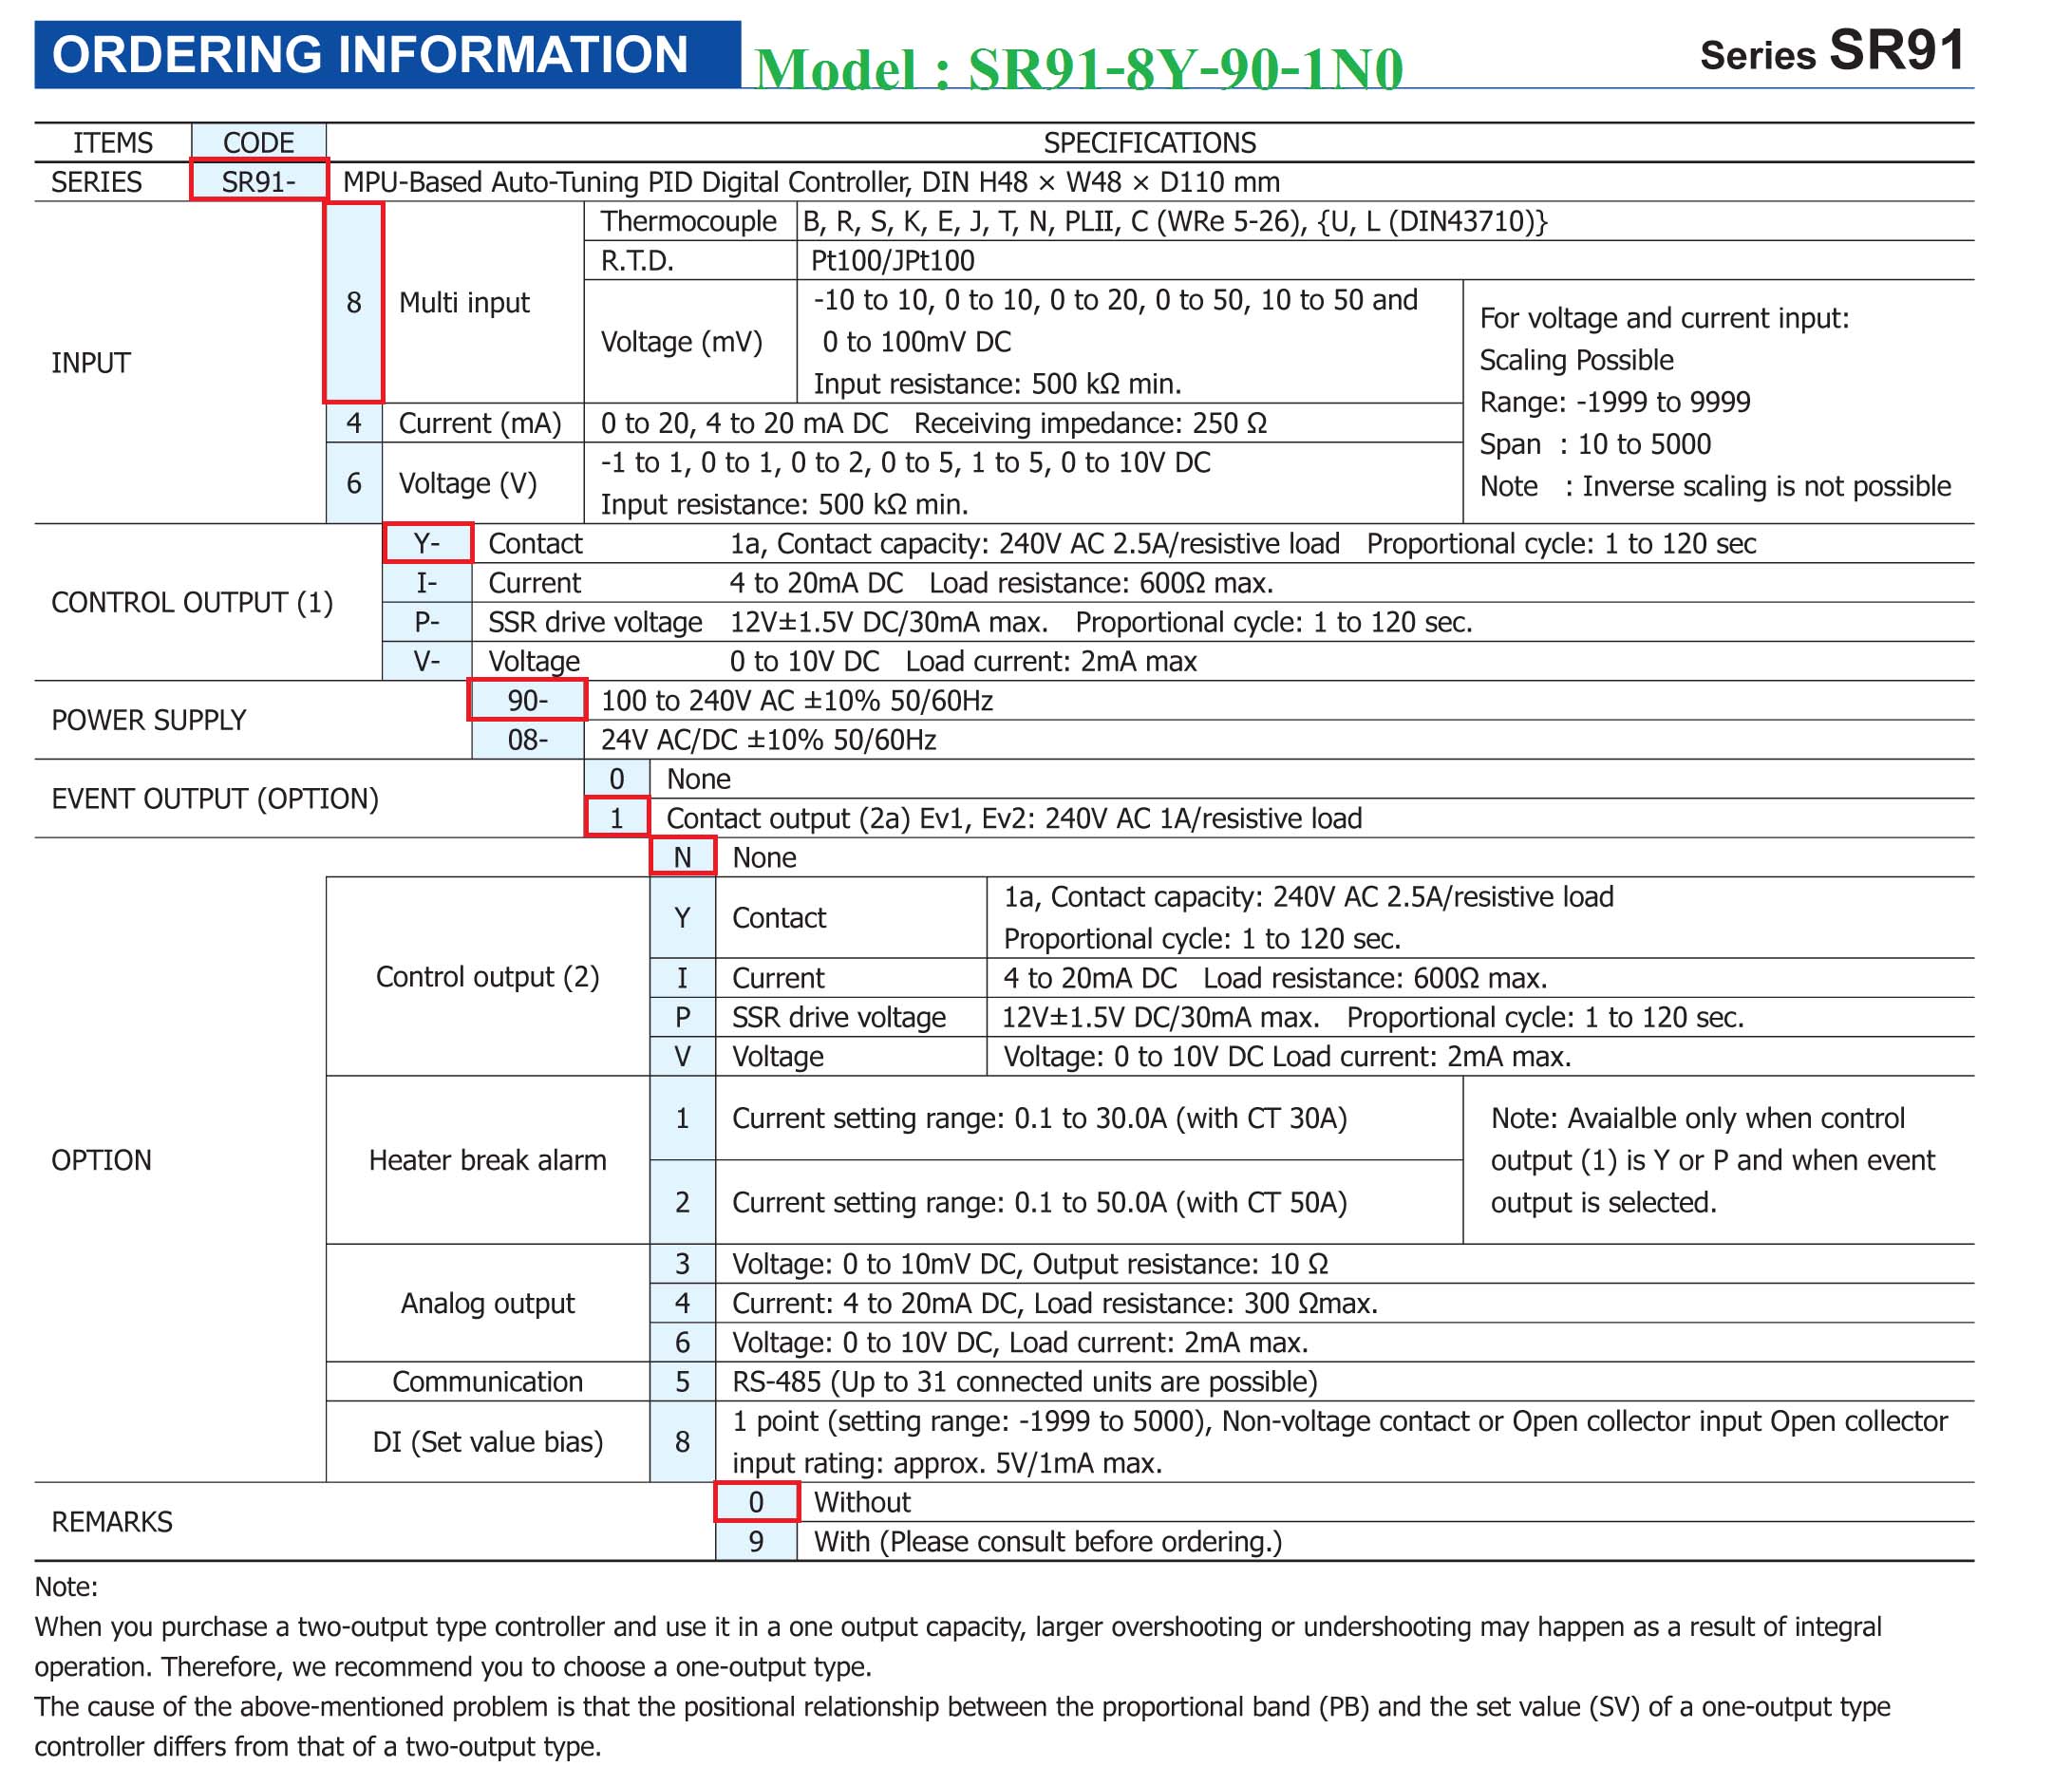 Shimaden SR91-8Y-90-1N0 Specifications